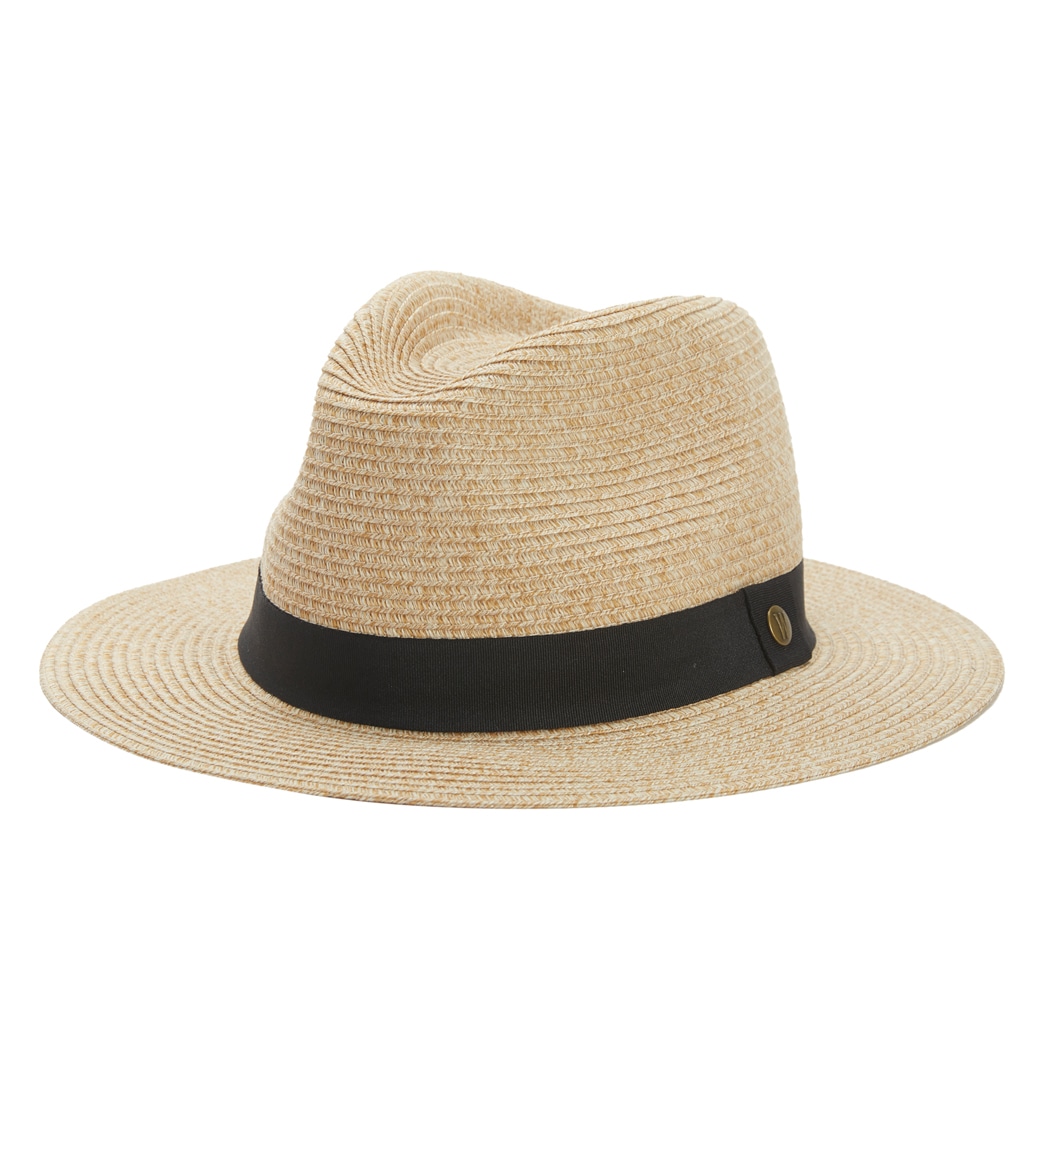 Wallaroo Men's Palm Beach Sun Hat - Beige Large/Xl Polyester - Swimoutlet.com